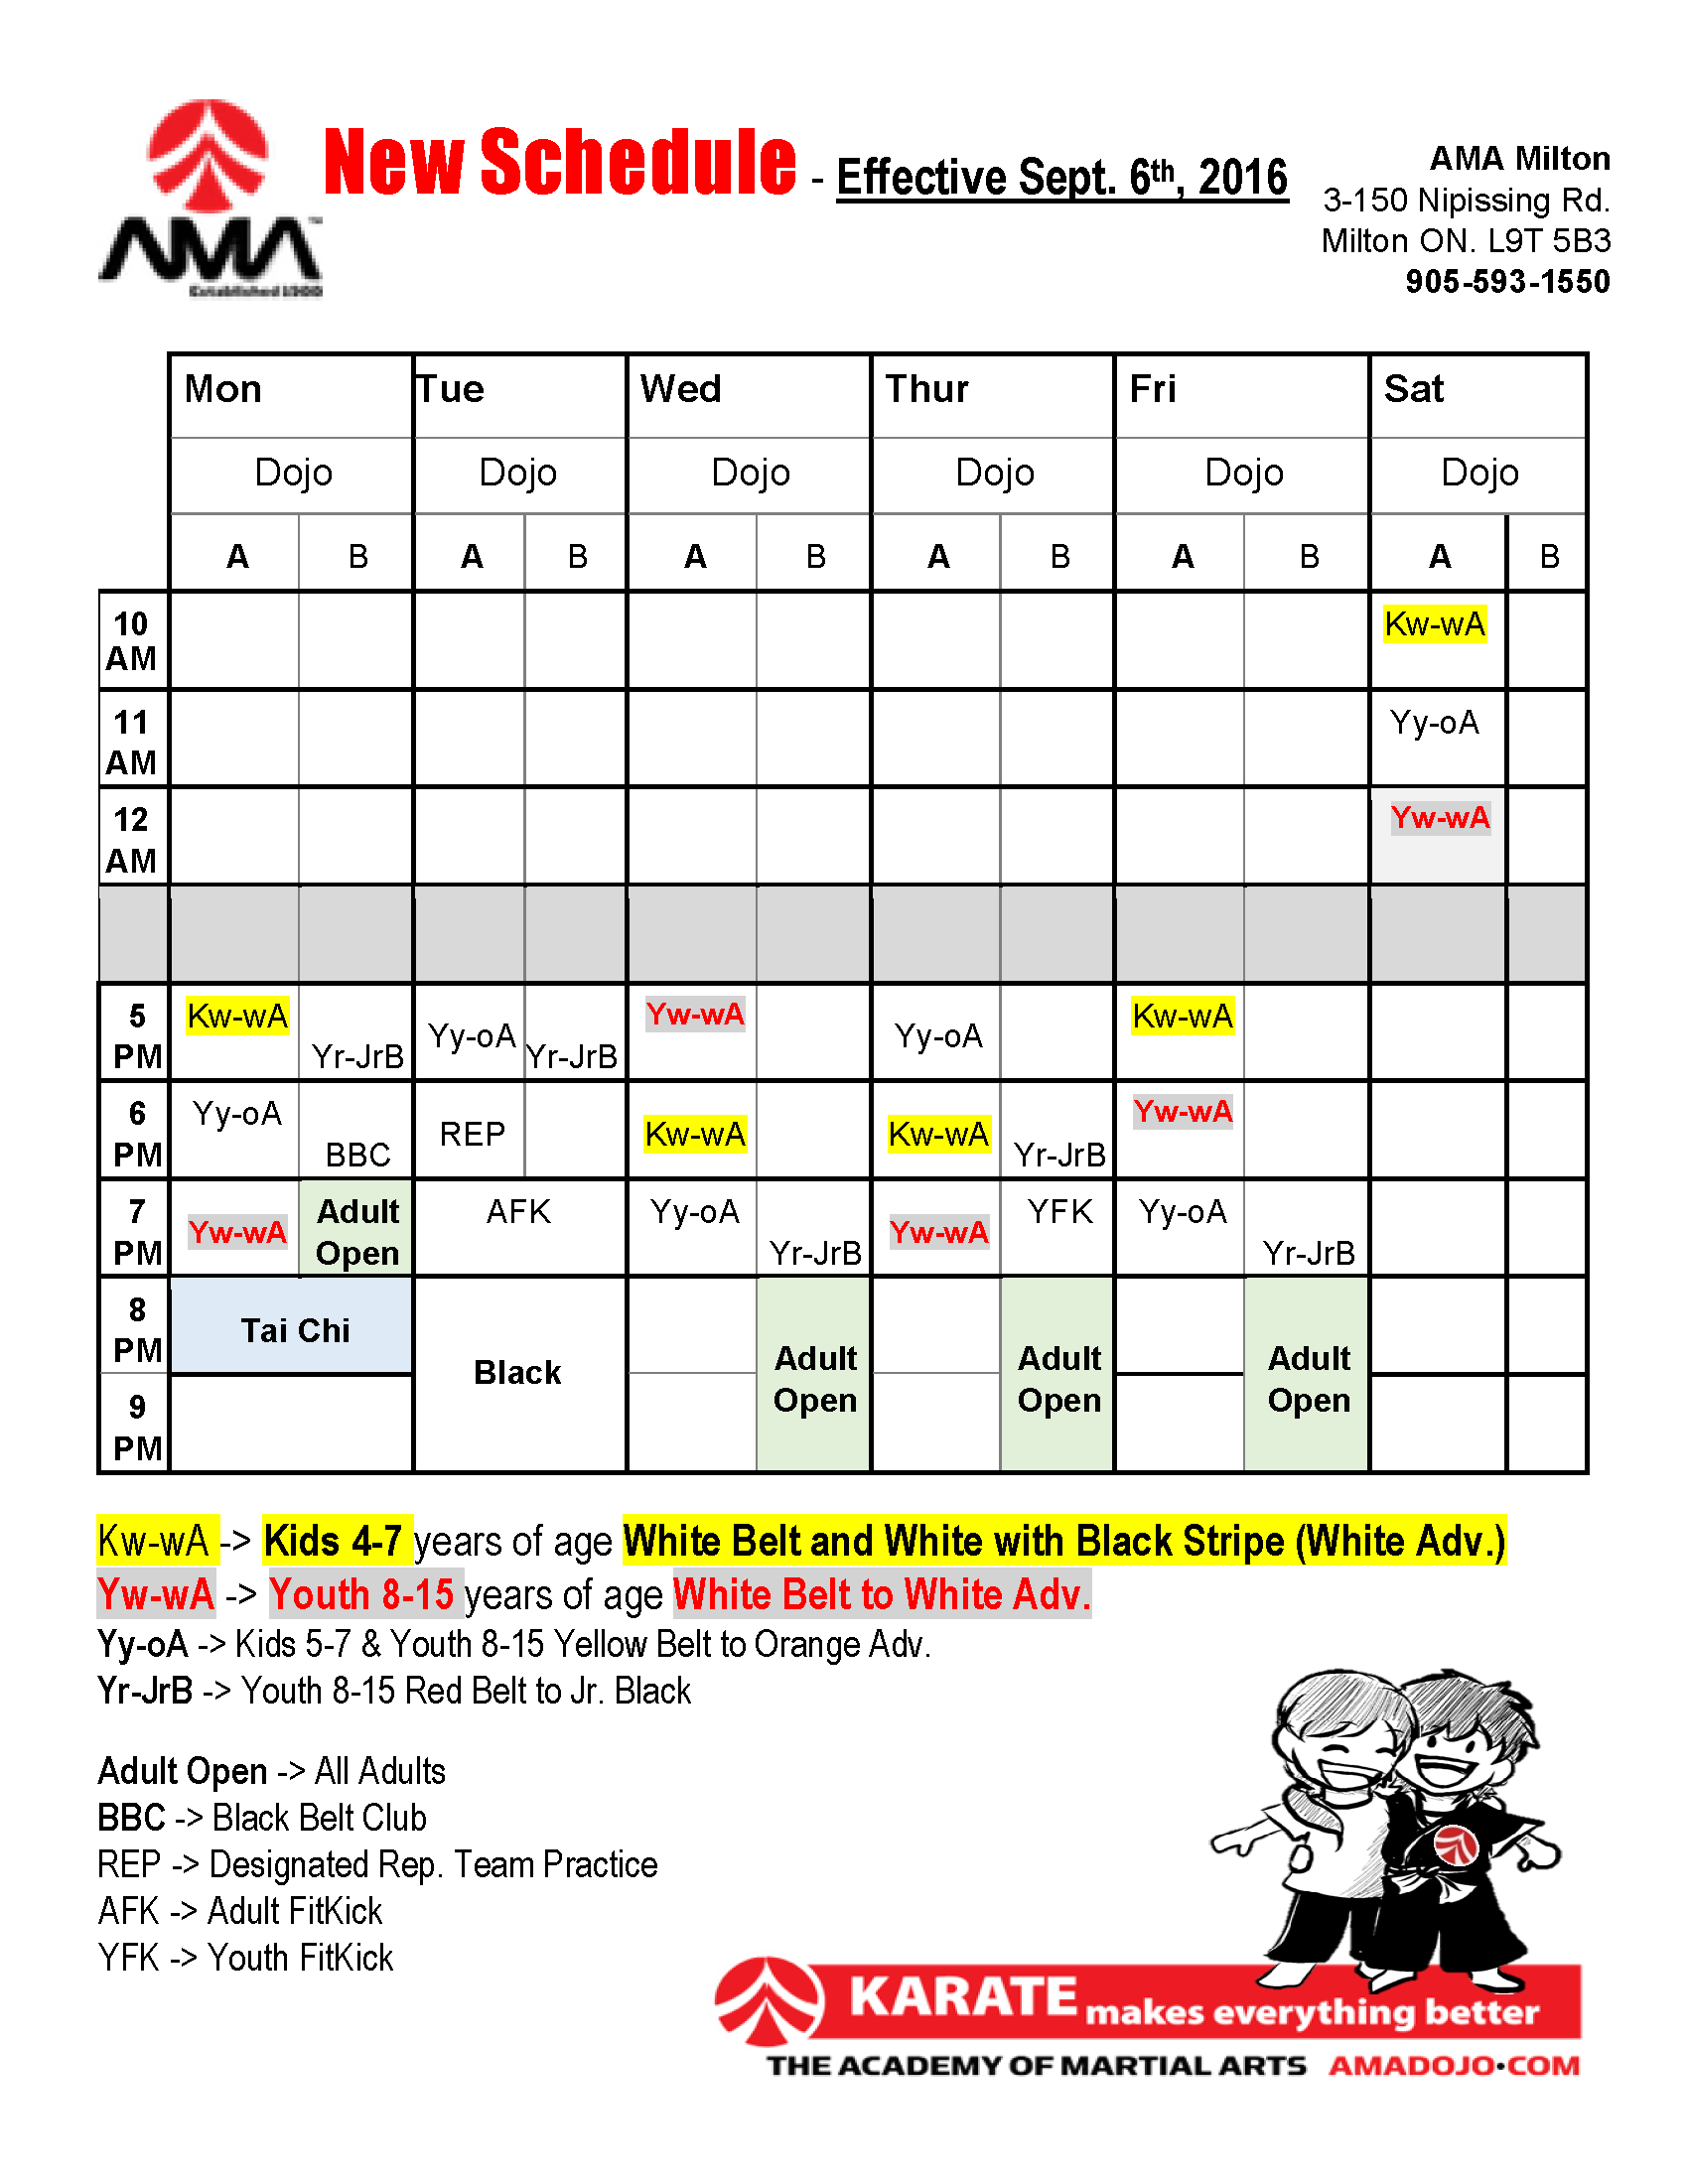 AMA Milton Class Schedule